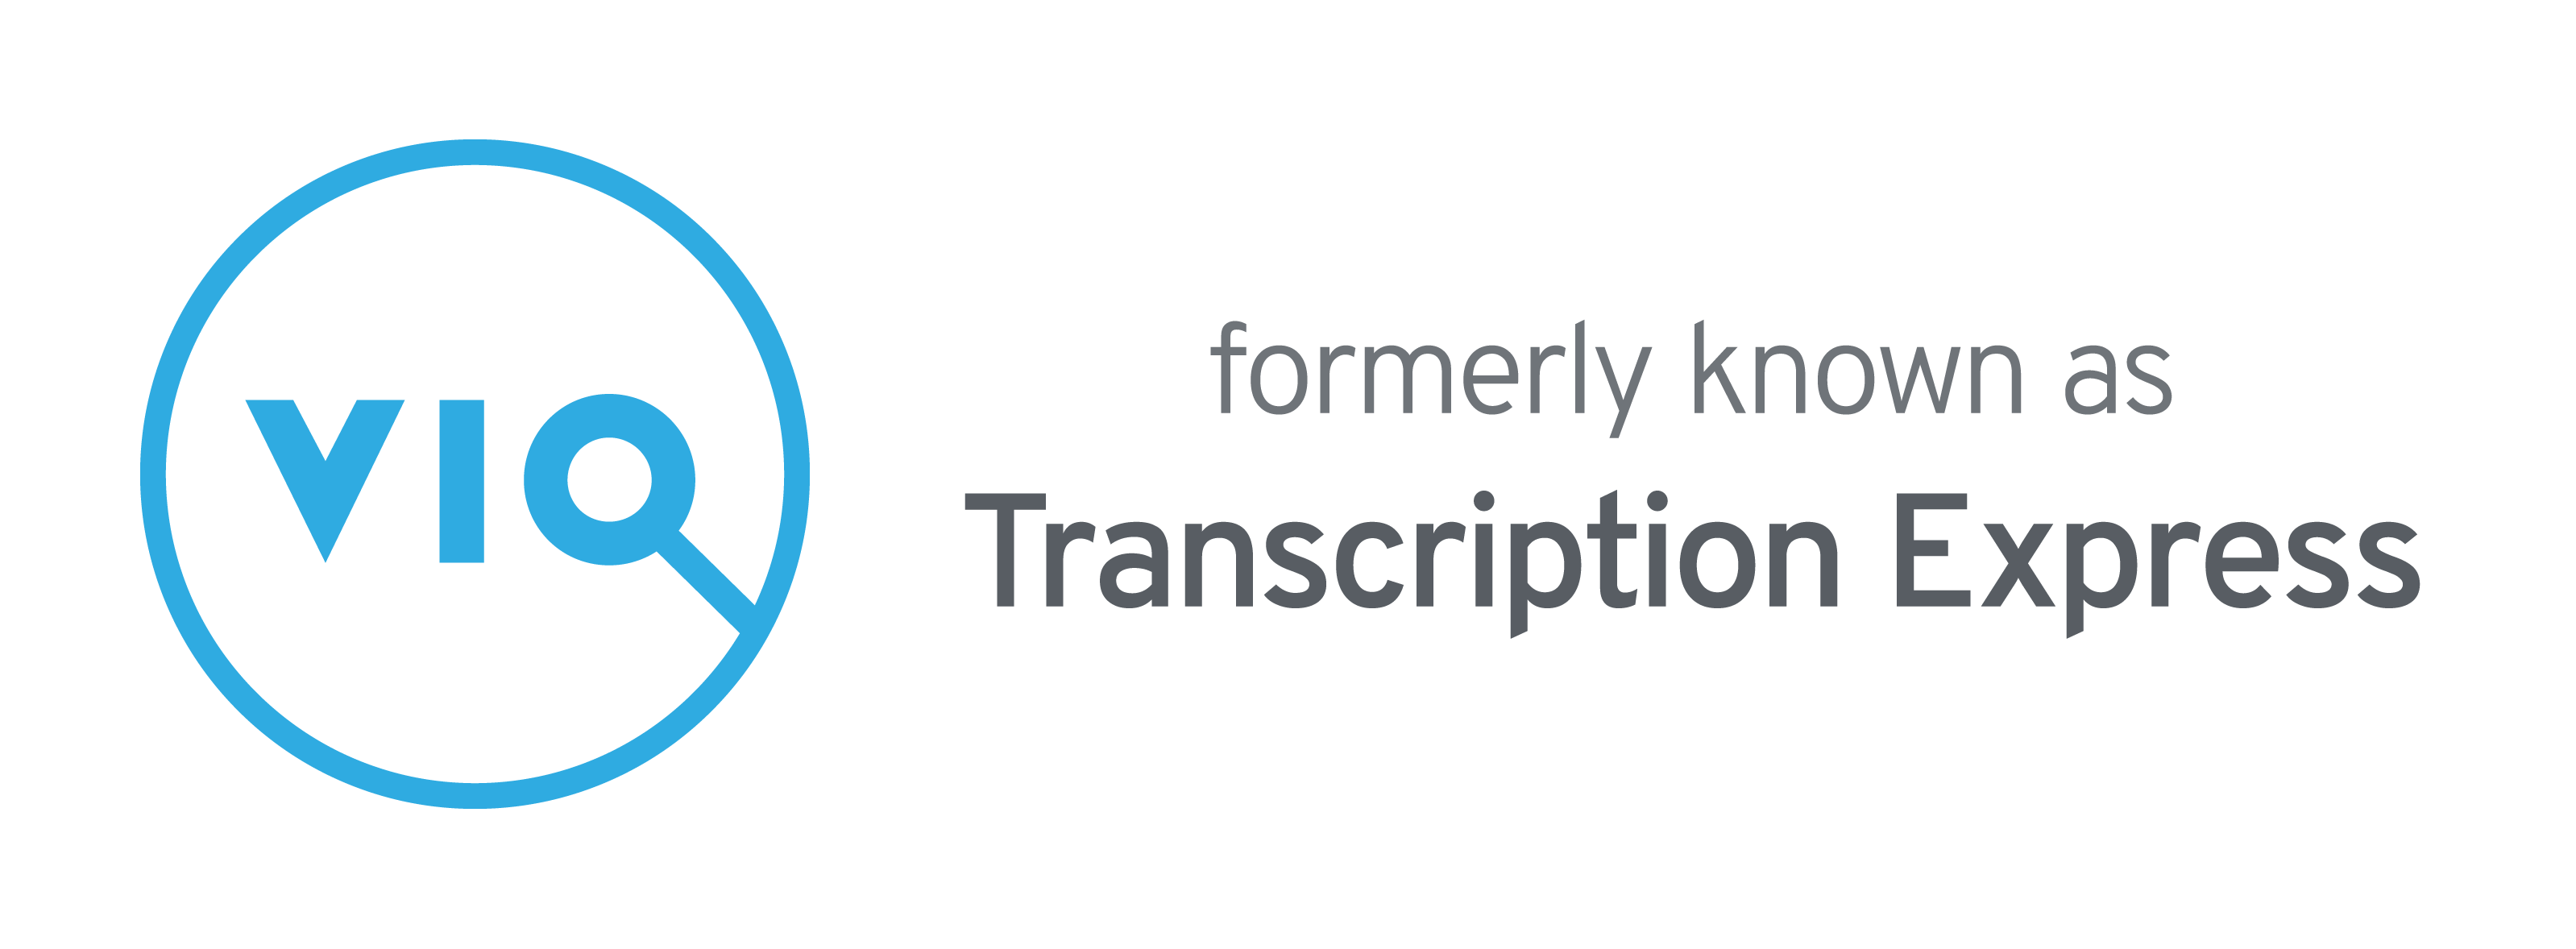 Transcription Express